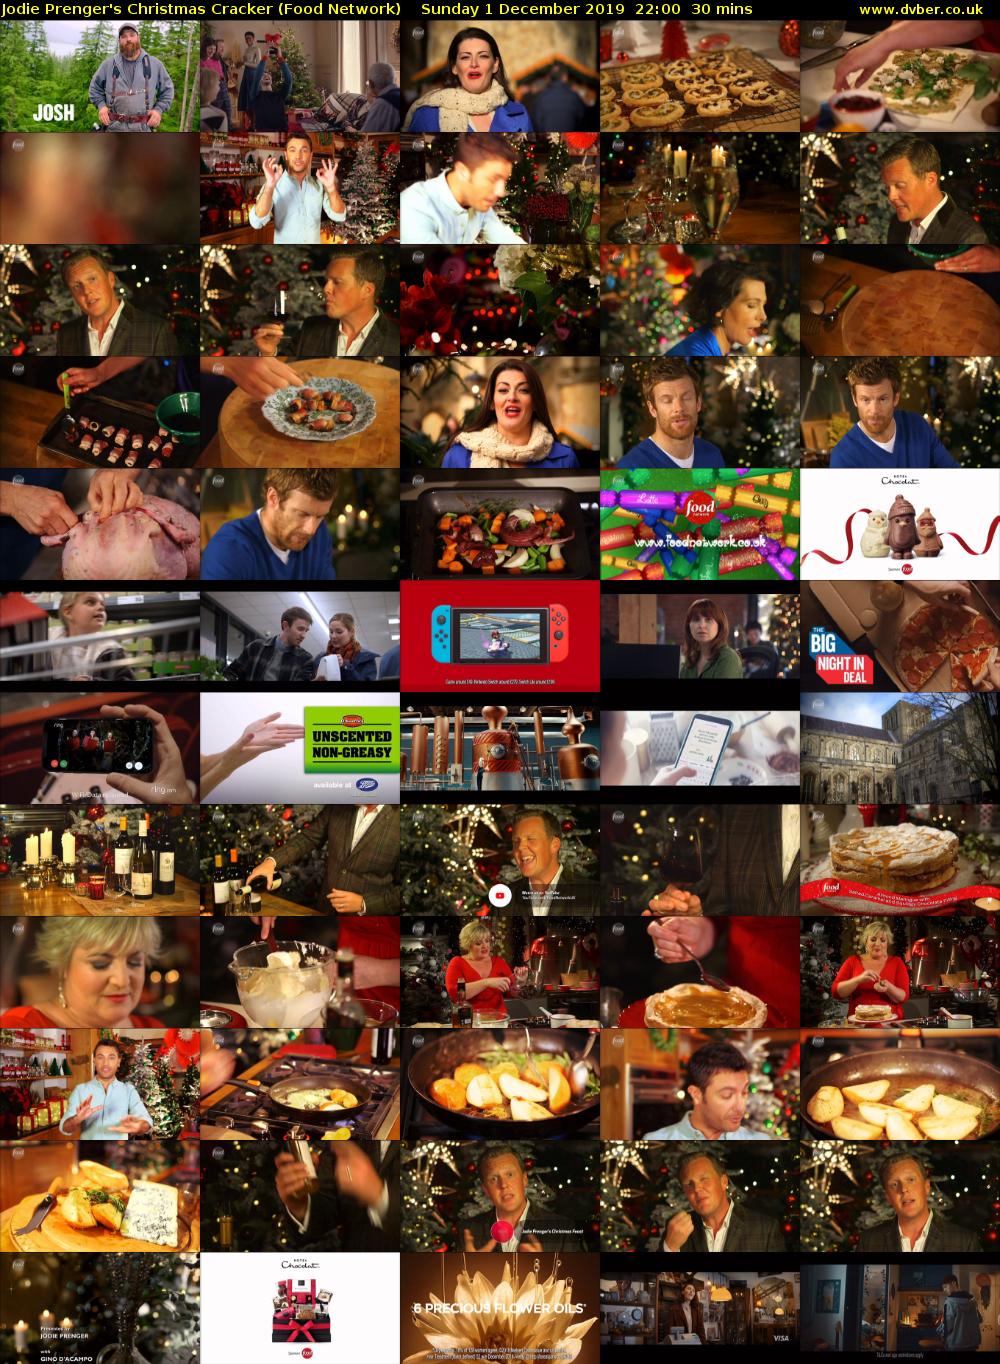 Jodie Prenger's Christmas Cracker (Food Network) Sunday 1 December 2019 22:00 - 22:30